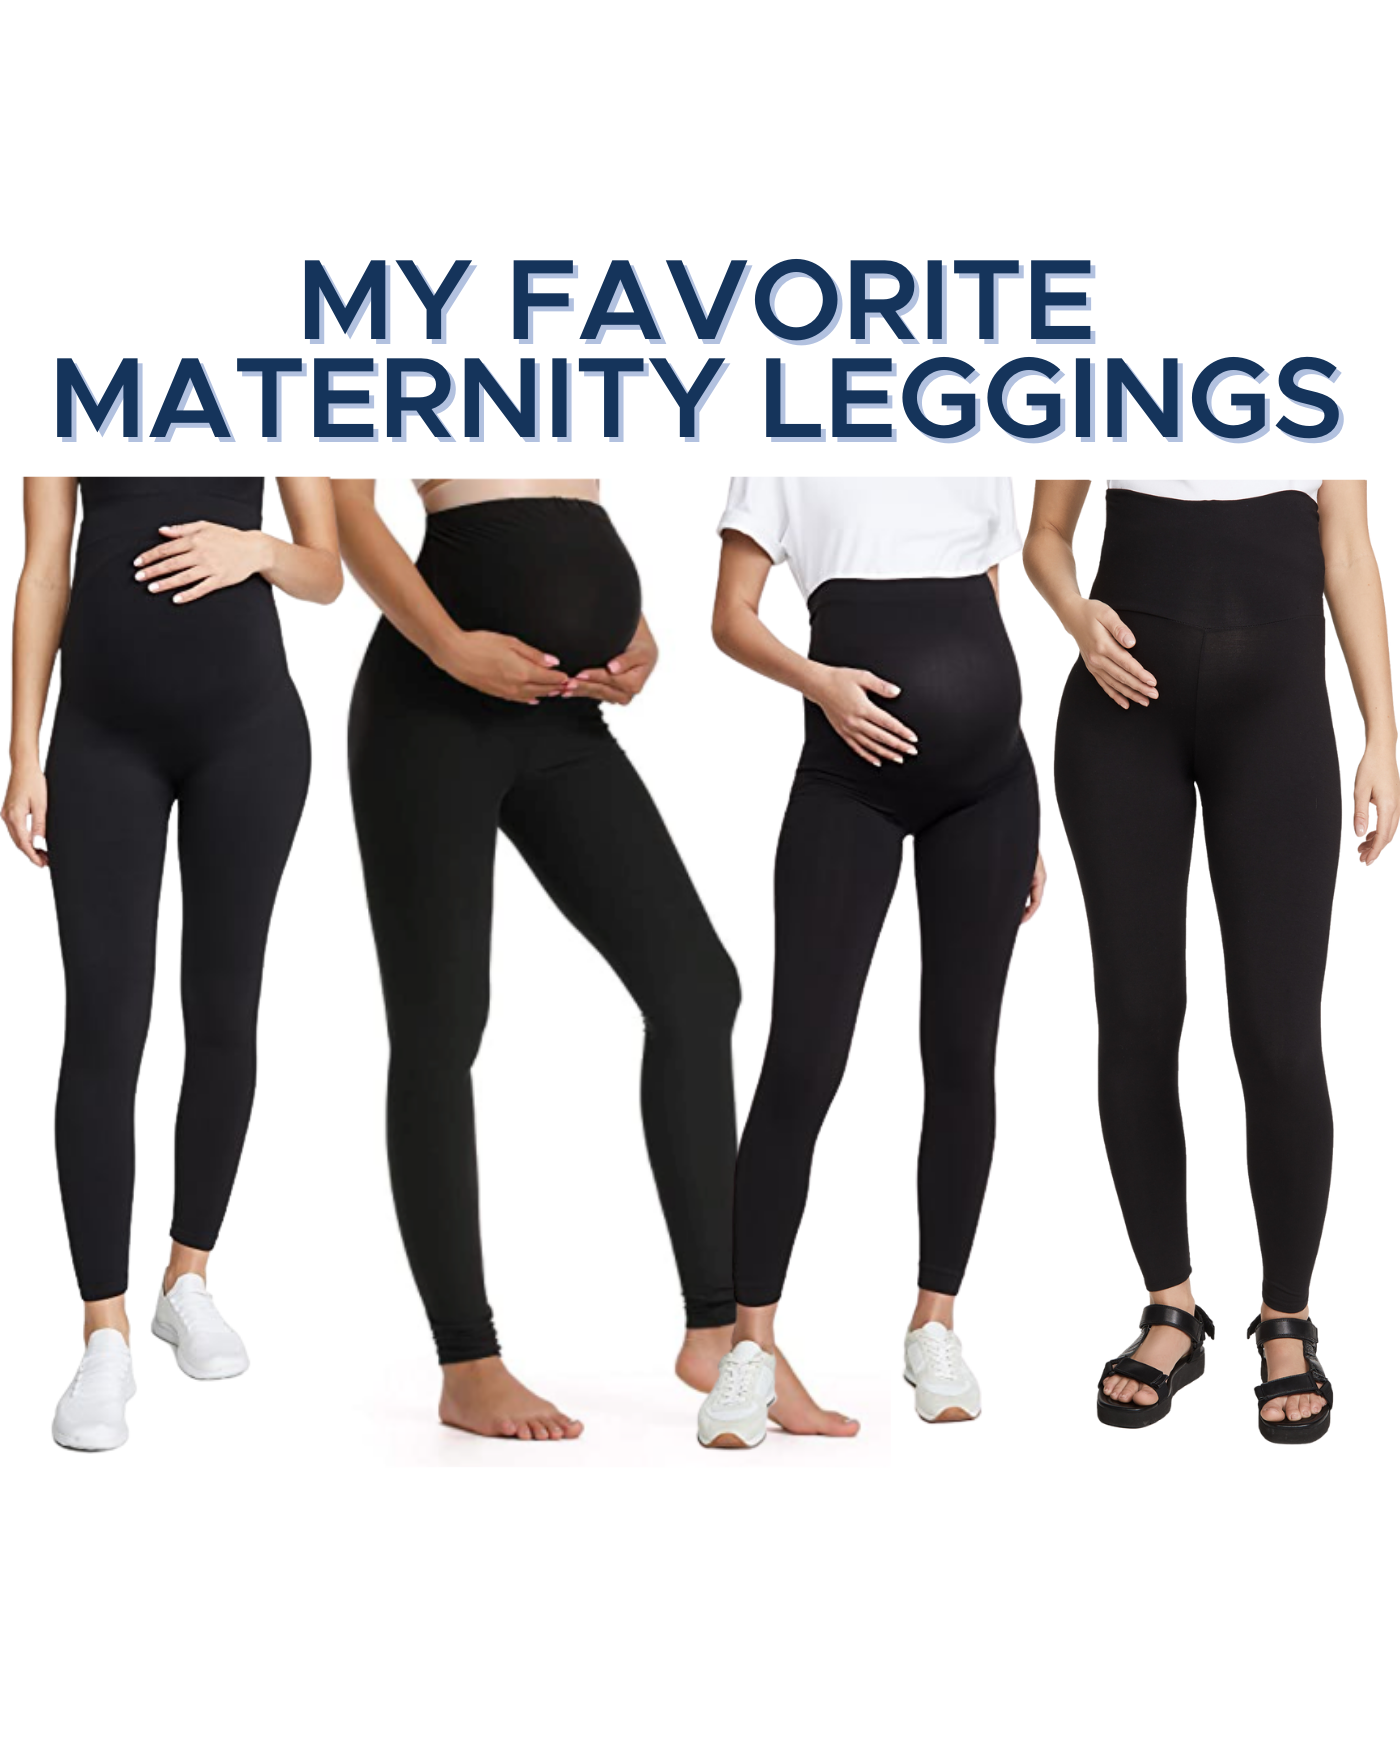 My Favorite Maternity Leggings (and joggers)